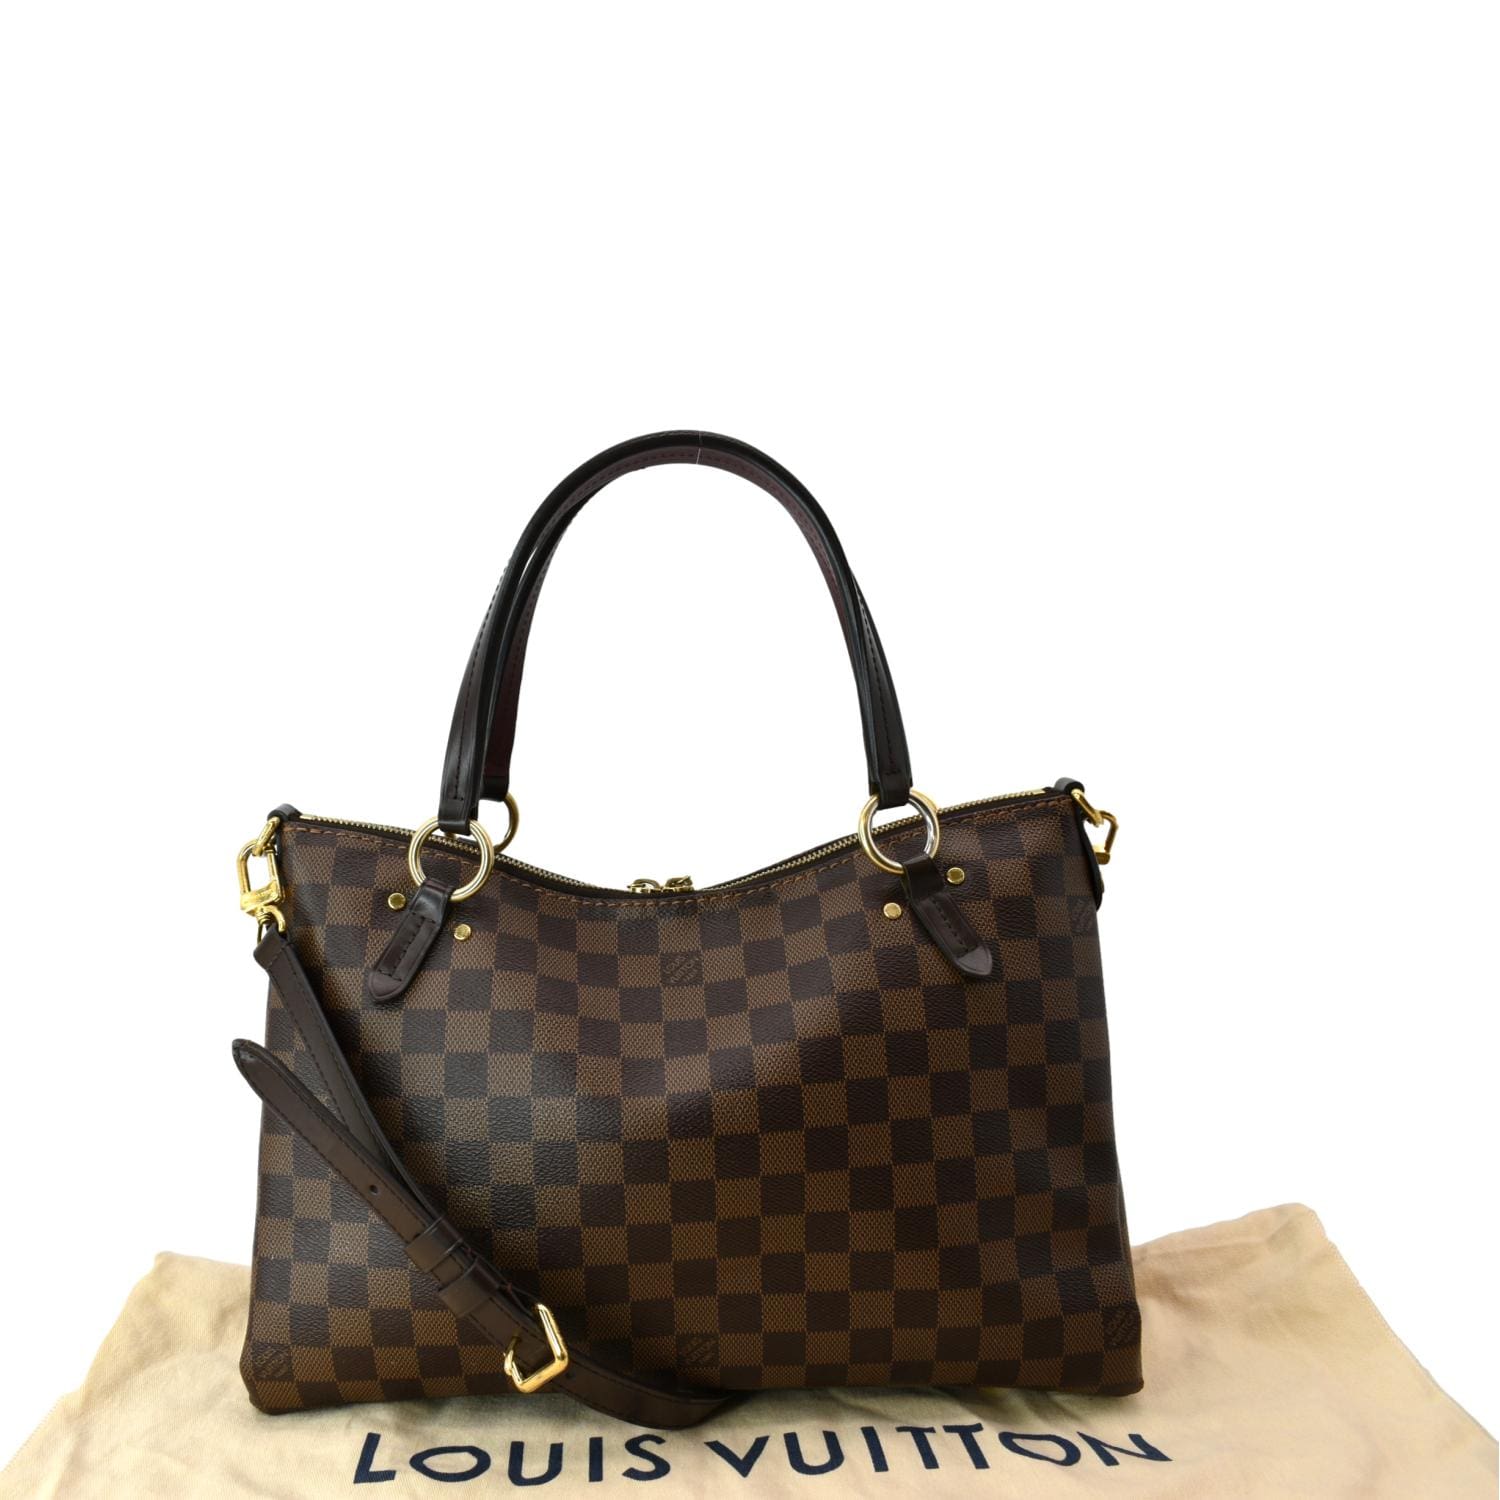 Louis Vuitton Lymington M40022 #louisvuitton #lv #lvbag #lvalmabb